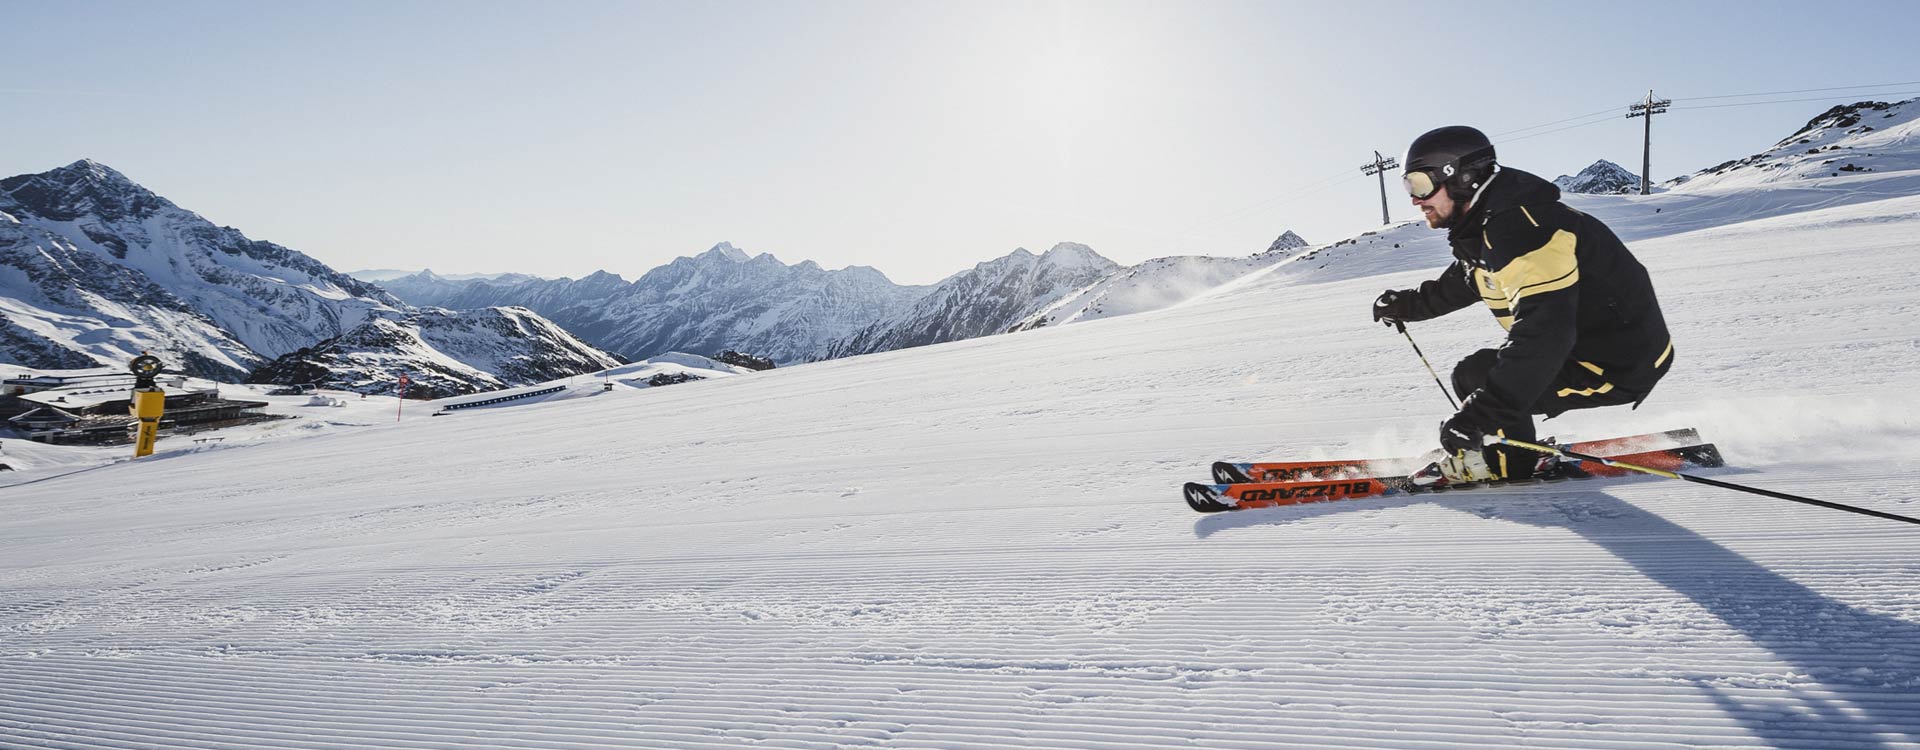 ALPIN SKI SCHOOL NEUSTIFT - Private ski courses on the Stubai Glacier